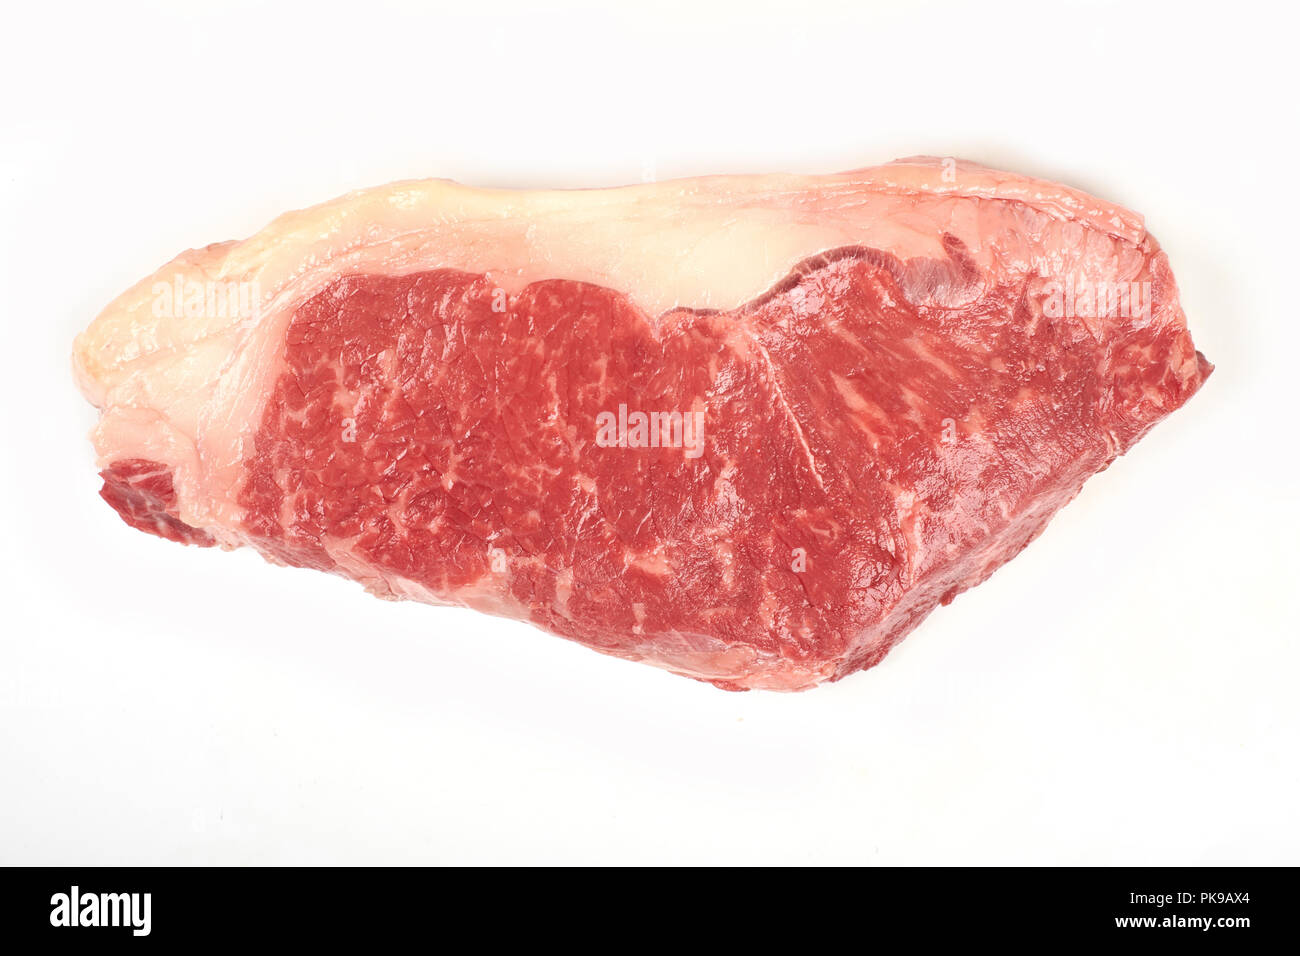 Crudo fresco steak isolati su sfondo bianco. Foto Stock